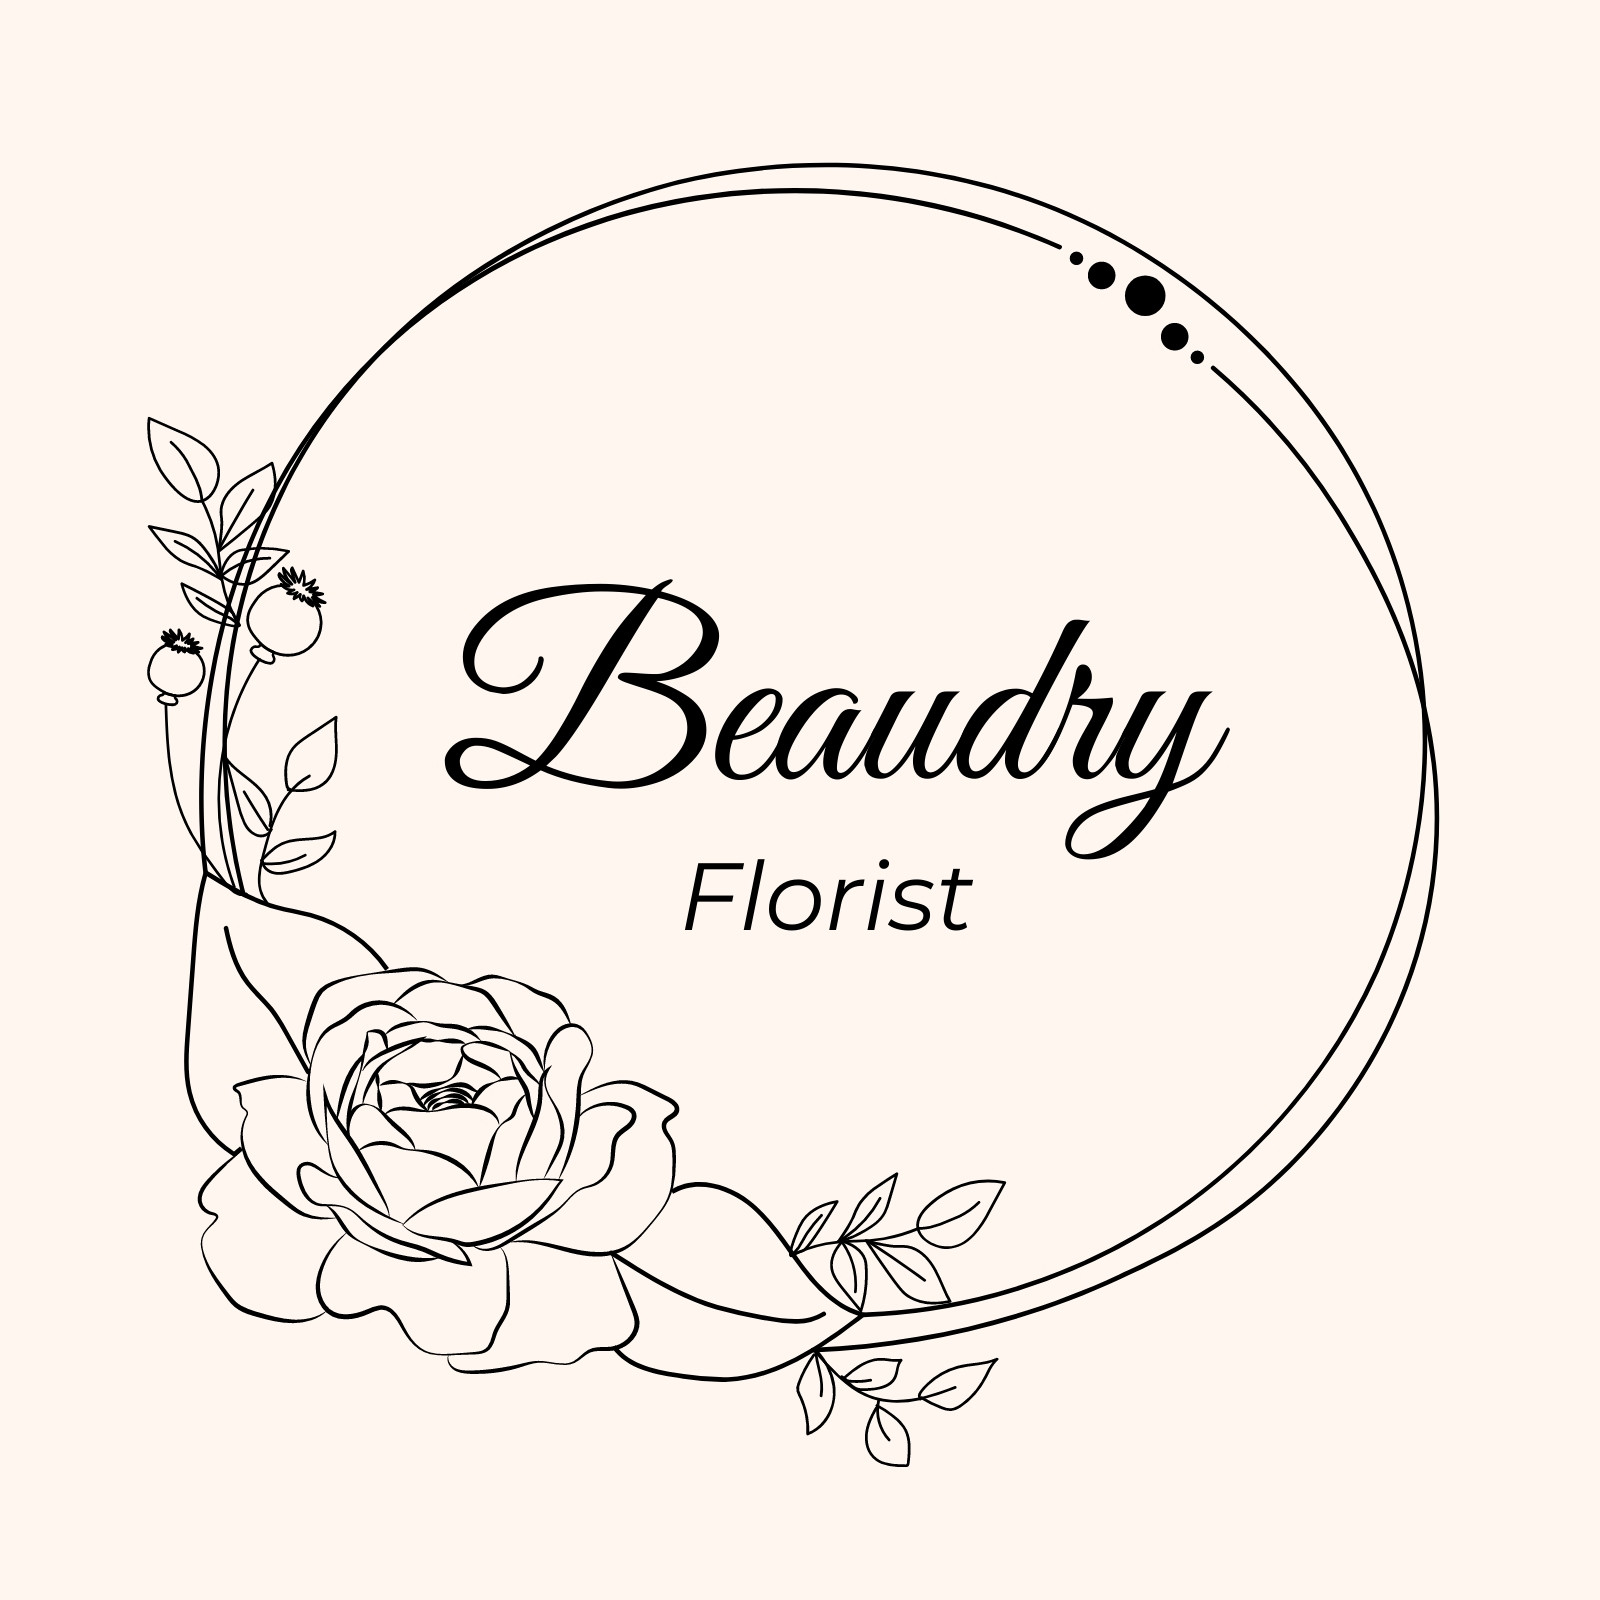 Customize 885+ Flower Shop Logo Templates Online - Canva